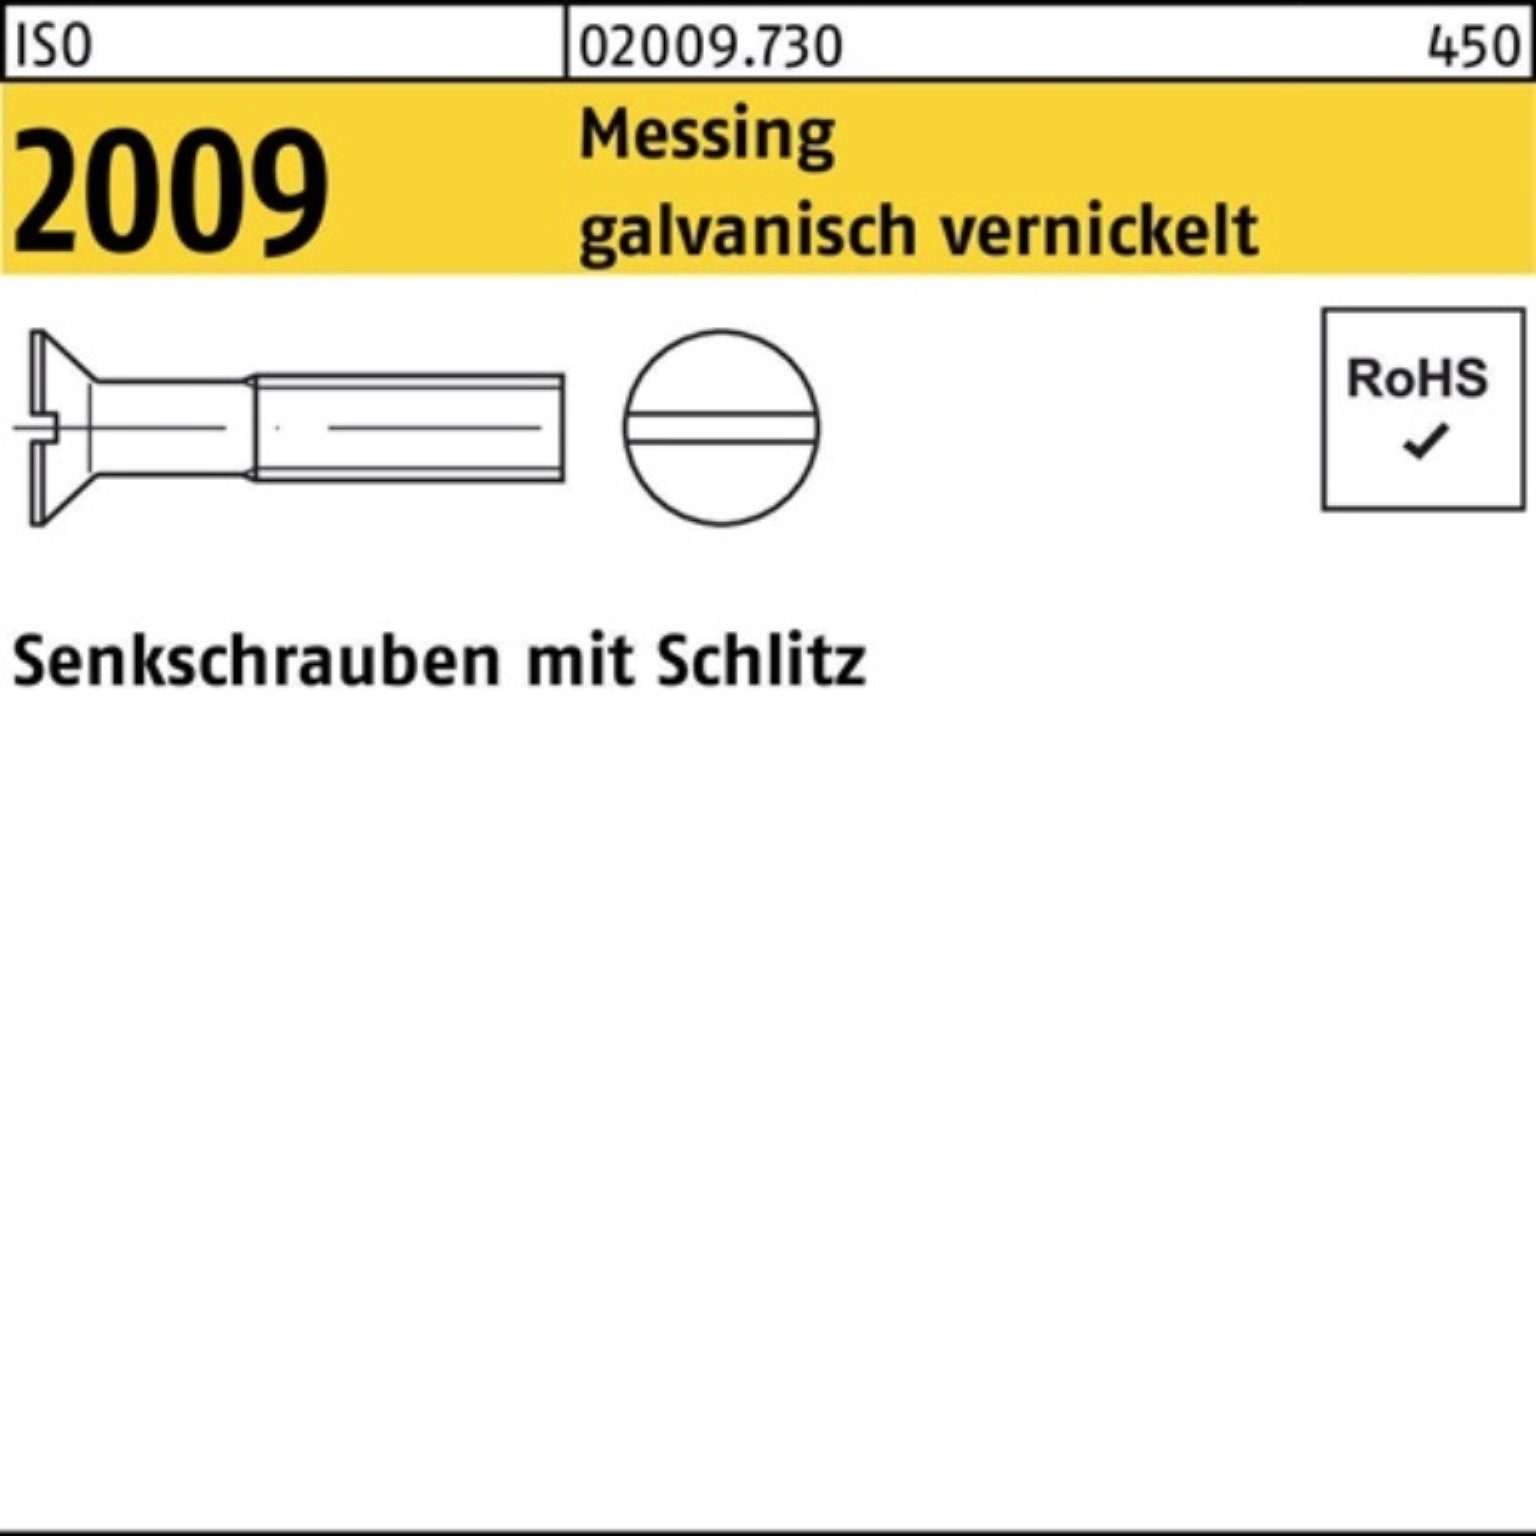 Senkschraube Messing 10 M6x 2009 Pack galv. Schlitz 200er ISO Reyher Senkschraube vernicke